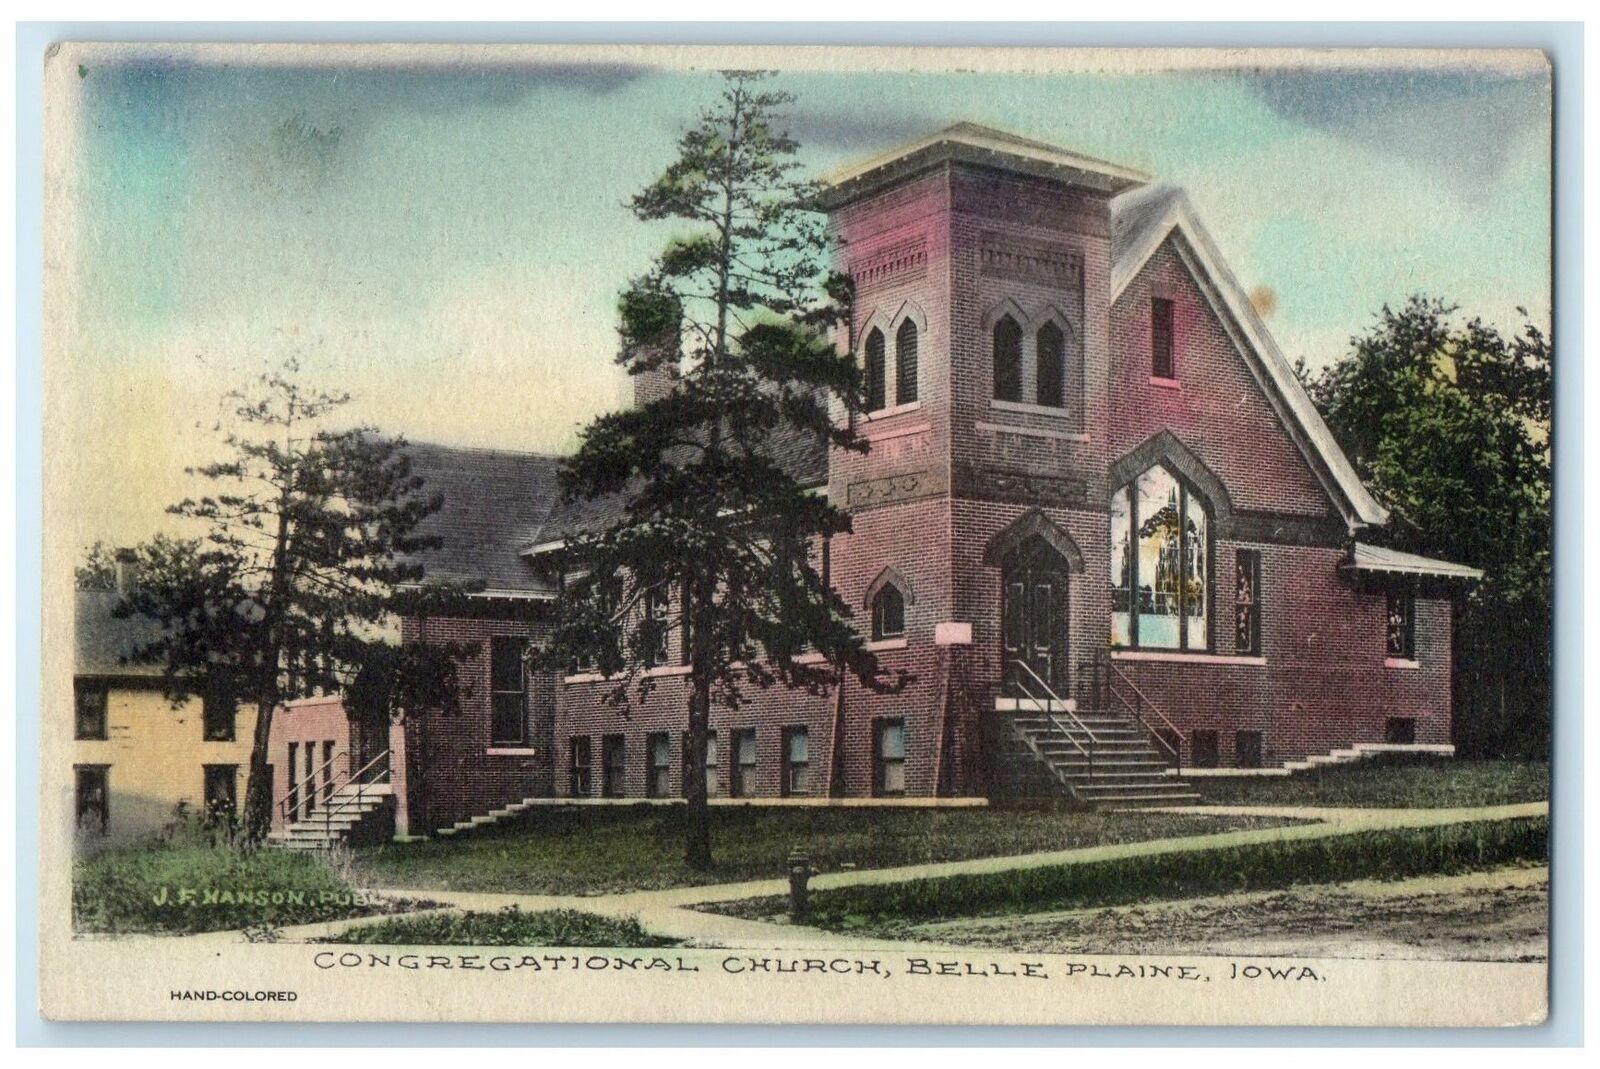 1909 Congregational Church Building Stairs Dirt Road Belle Plaine Iowa Postcard